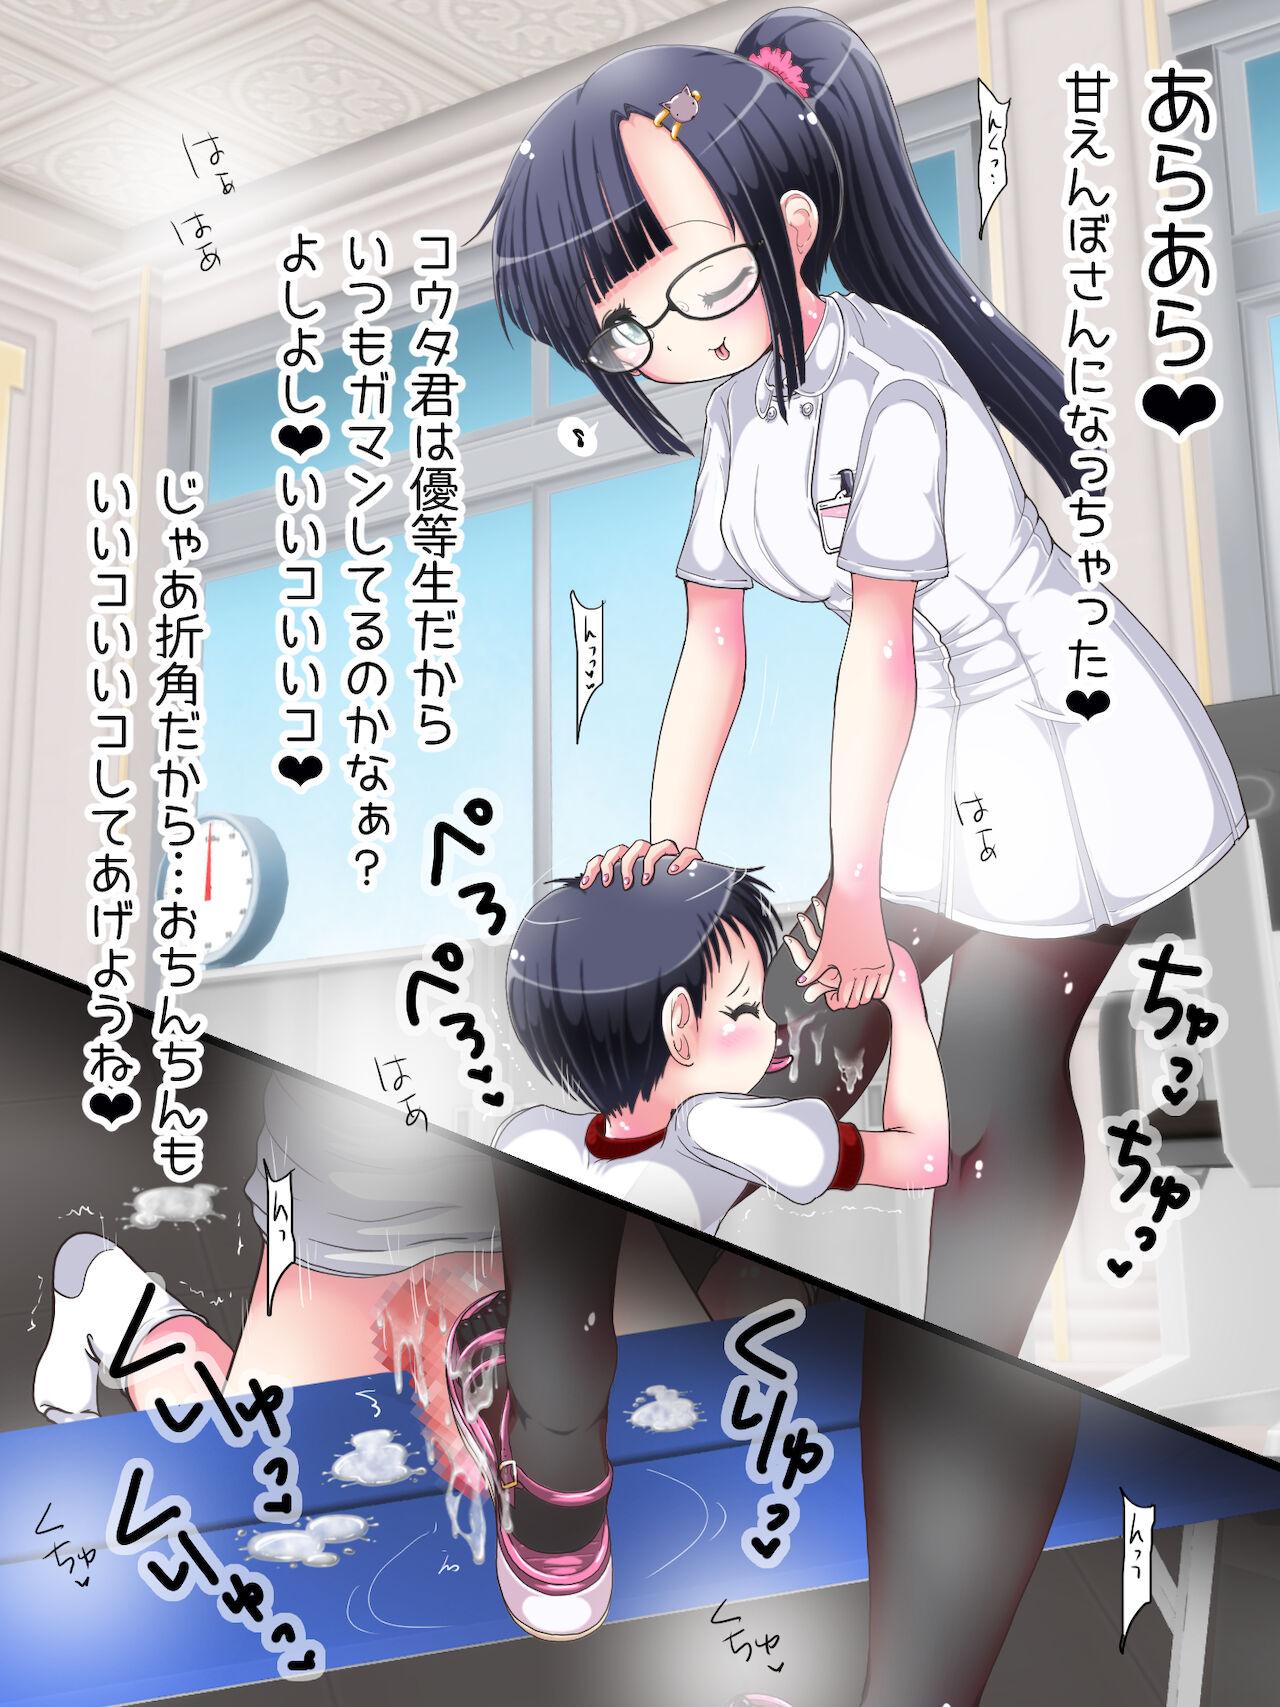 [Oneashi] One-Shota Footjob Lessons: Foot-Stroked by Nurses 229